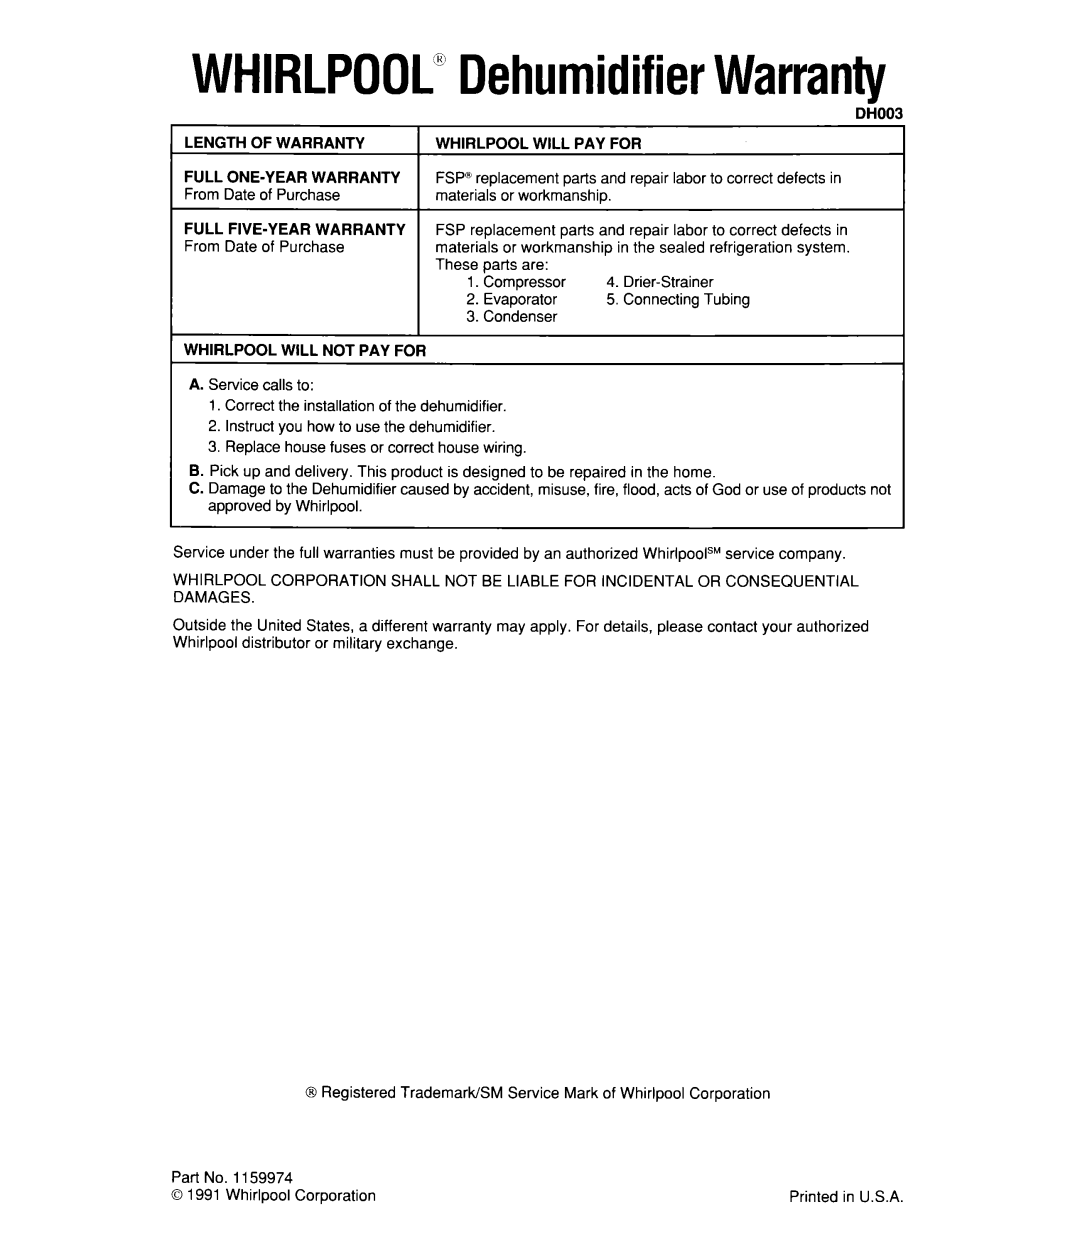 Whirlpool 1ADM202XX0 manual WHIRLPOOL”DehumidifierWarranty 